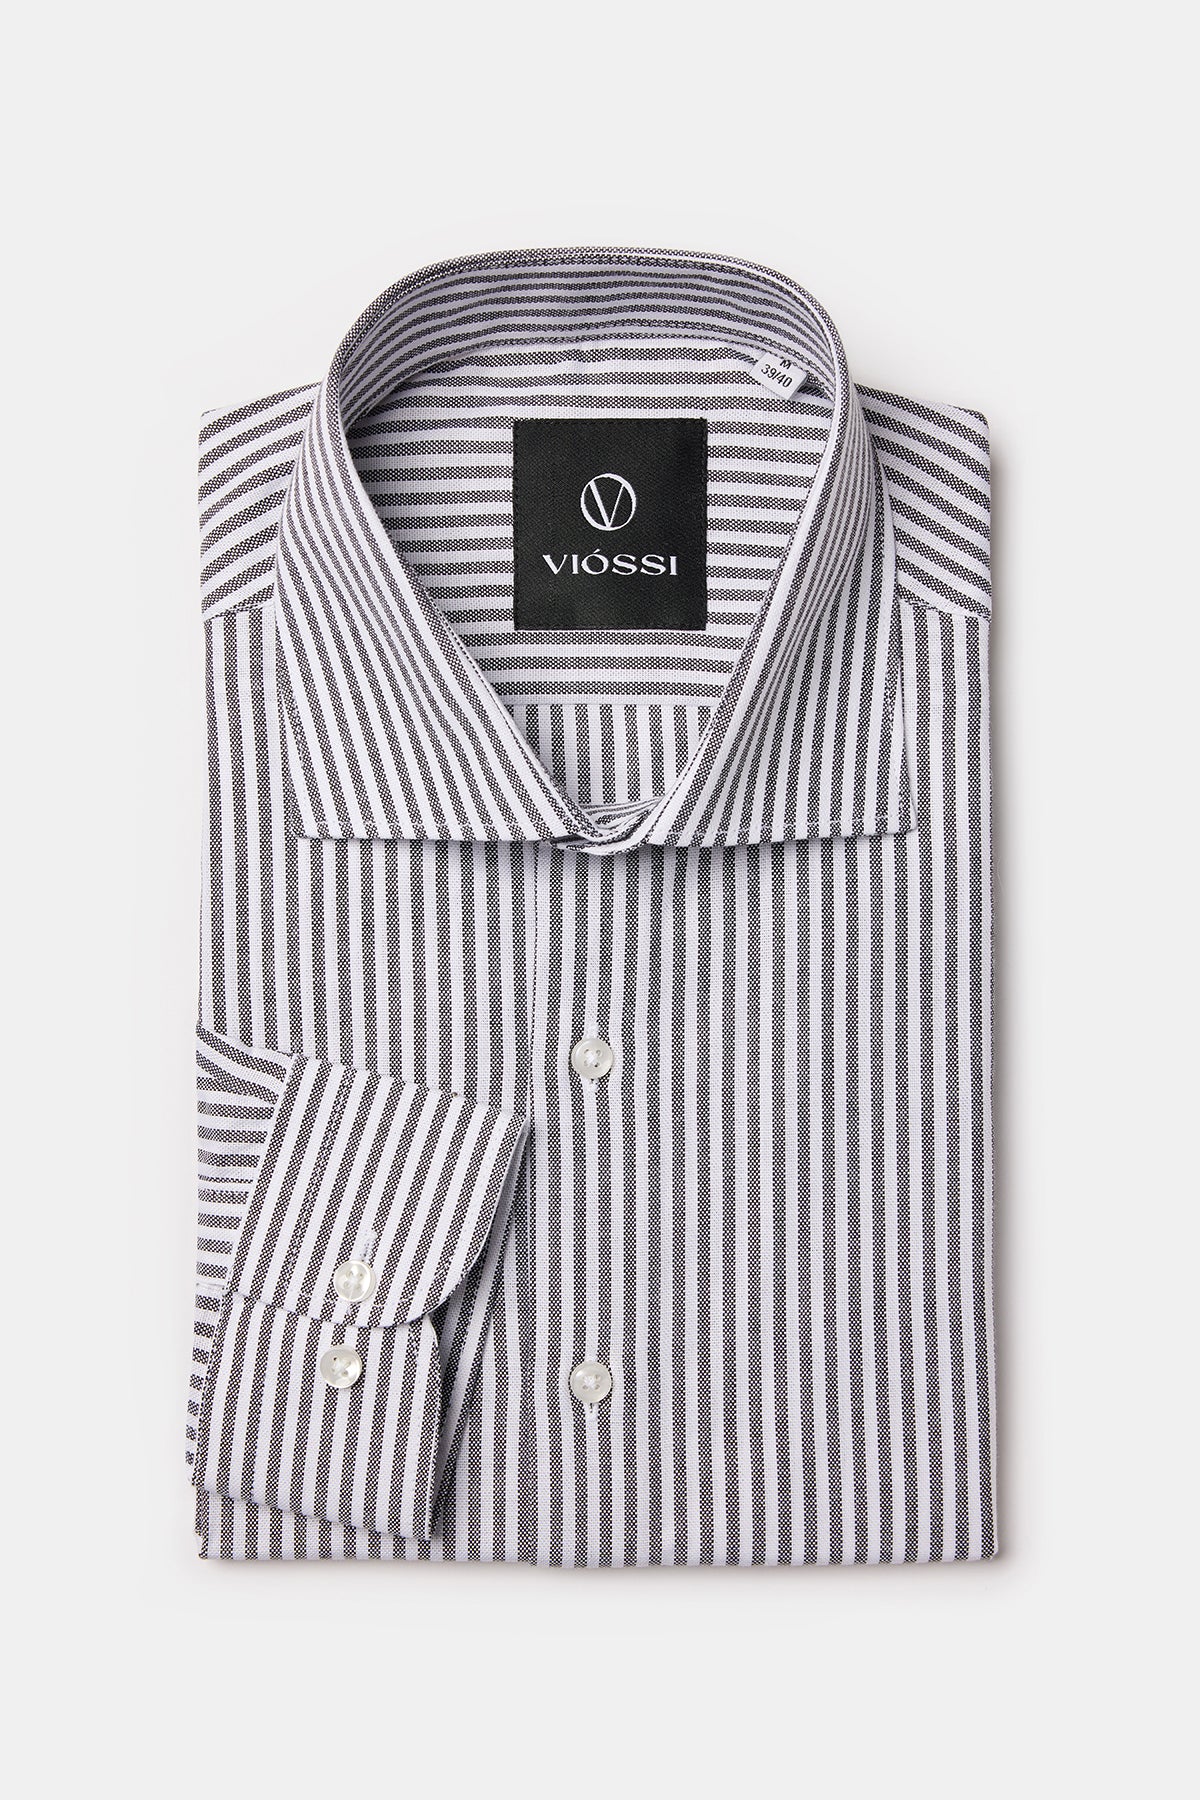 Black Striped Italian Spread Collar Shirt